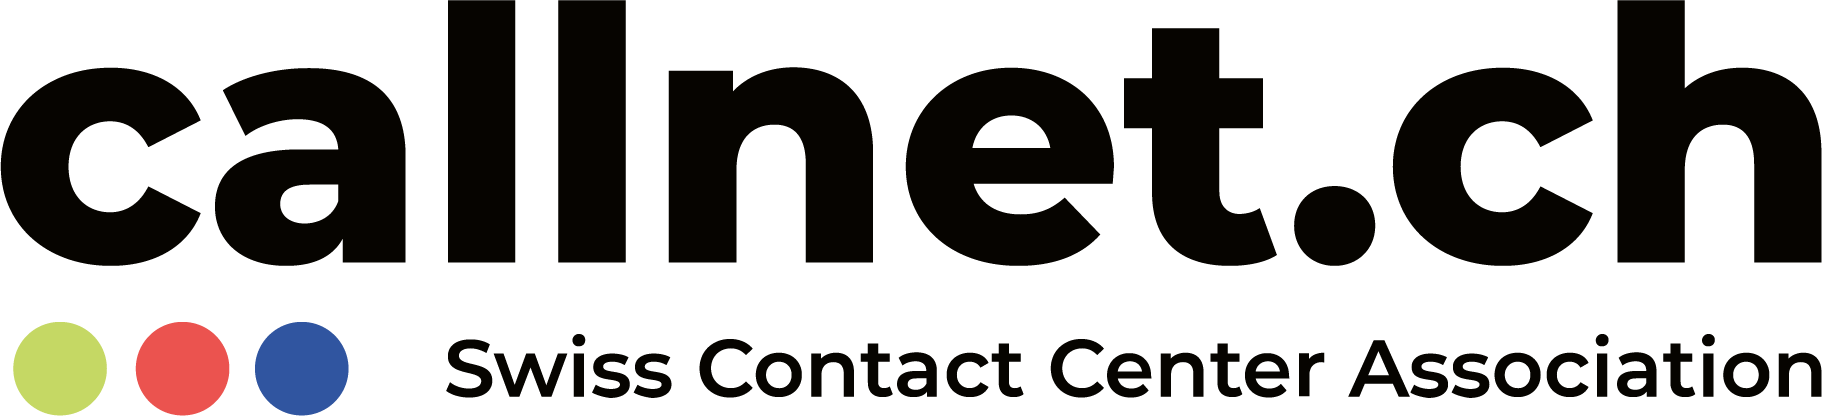 Callnet.ch_neues Logo_CMYK